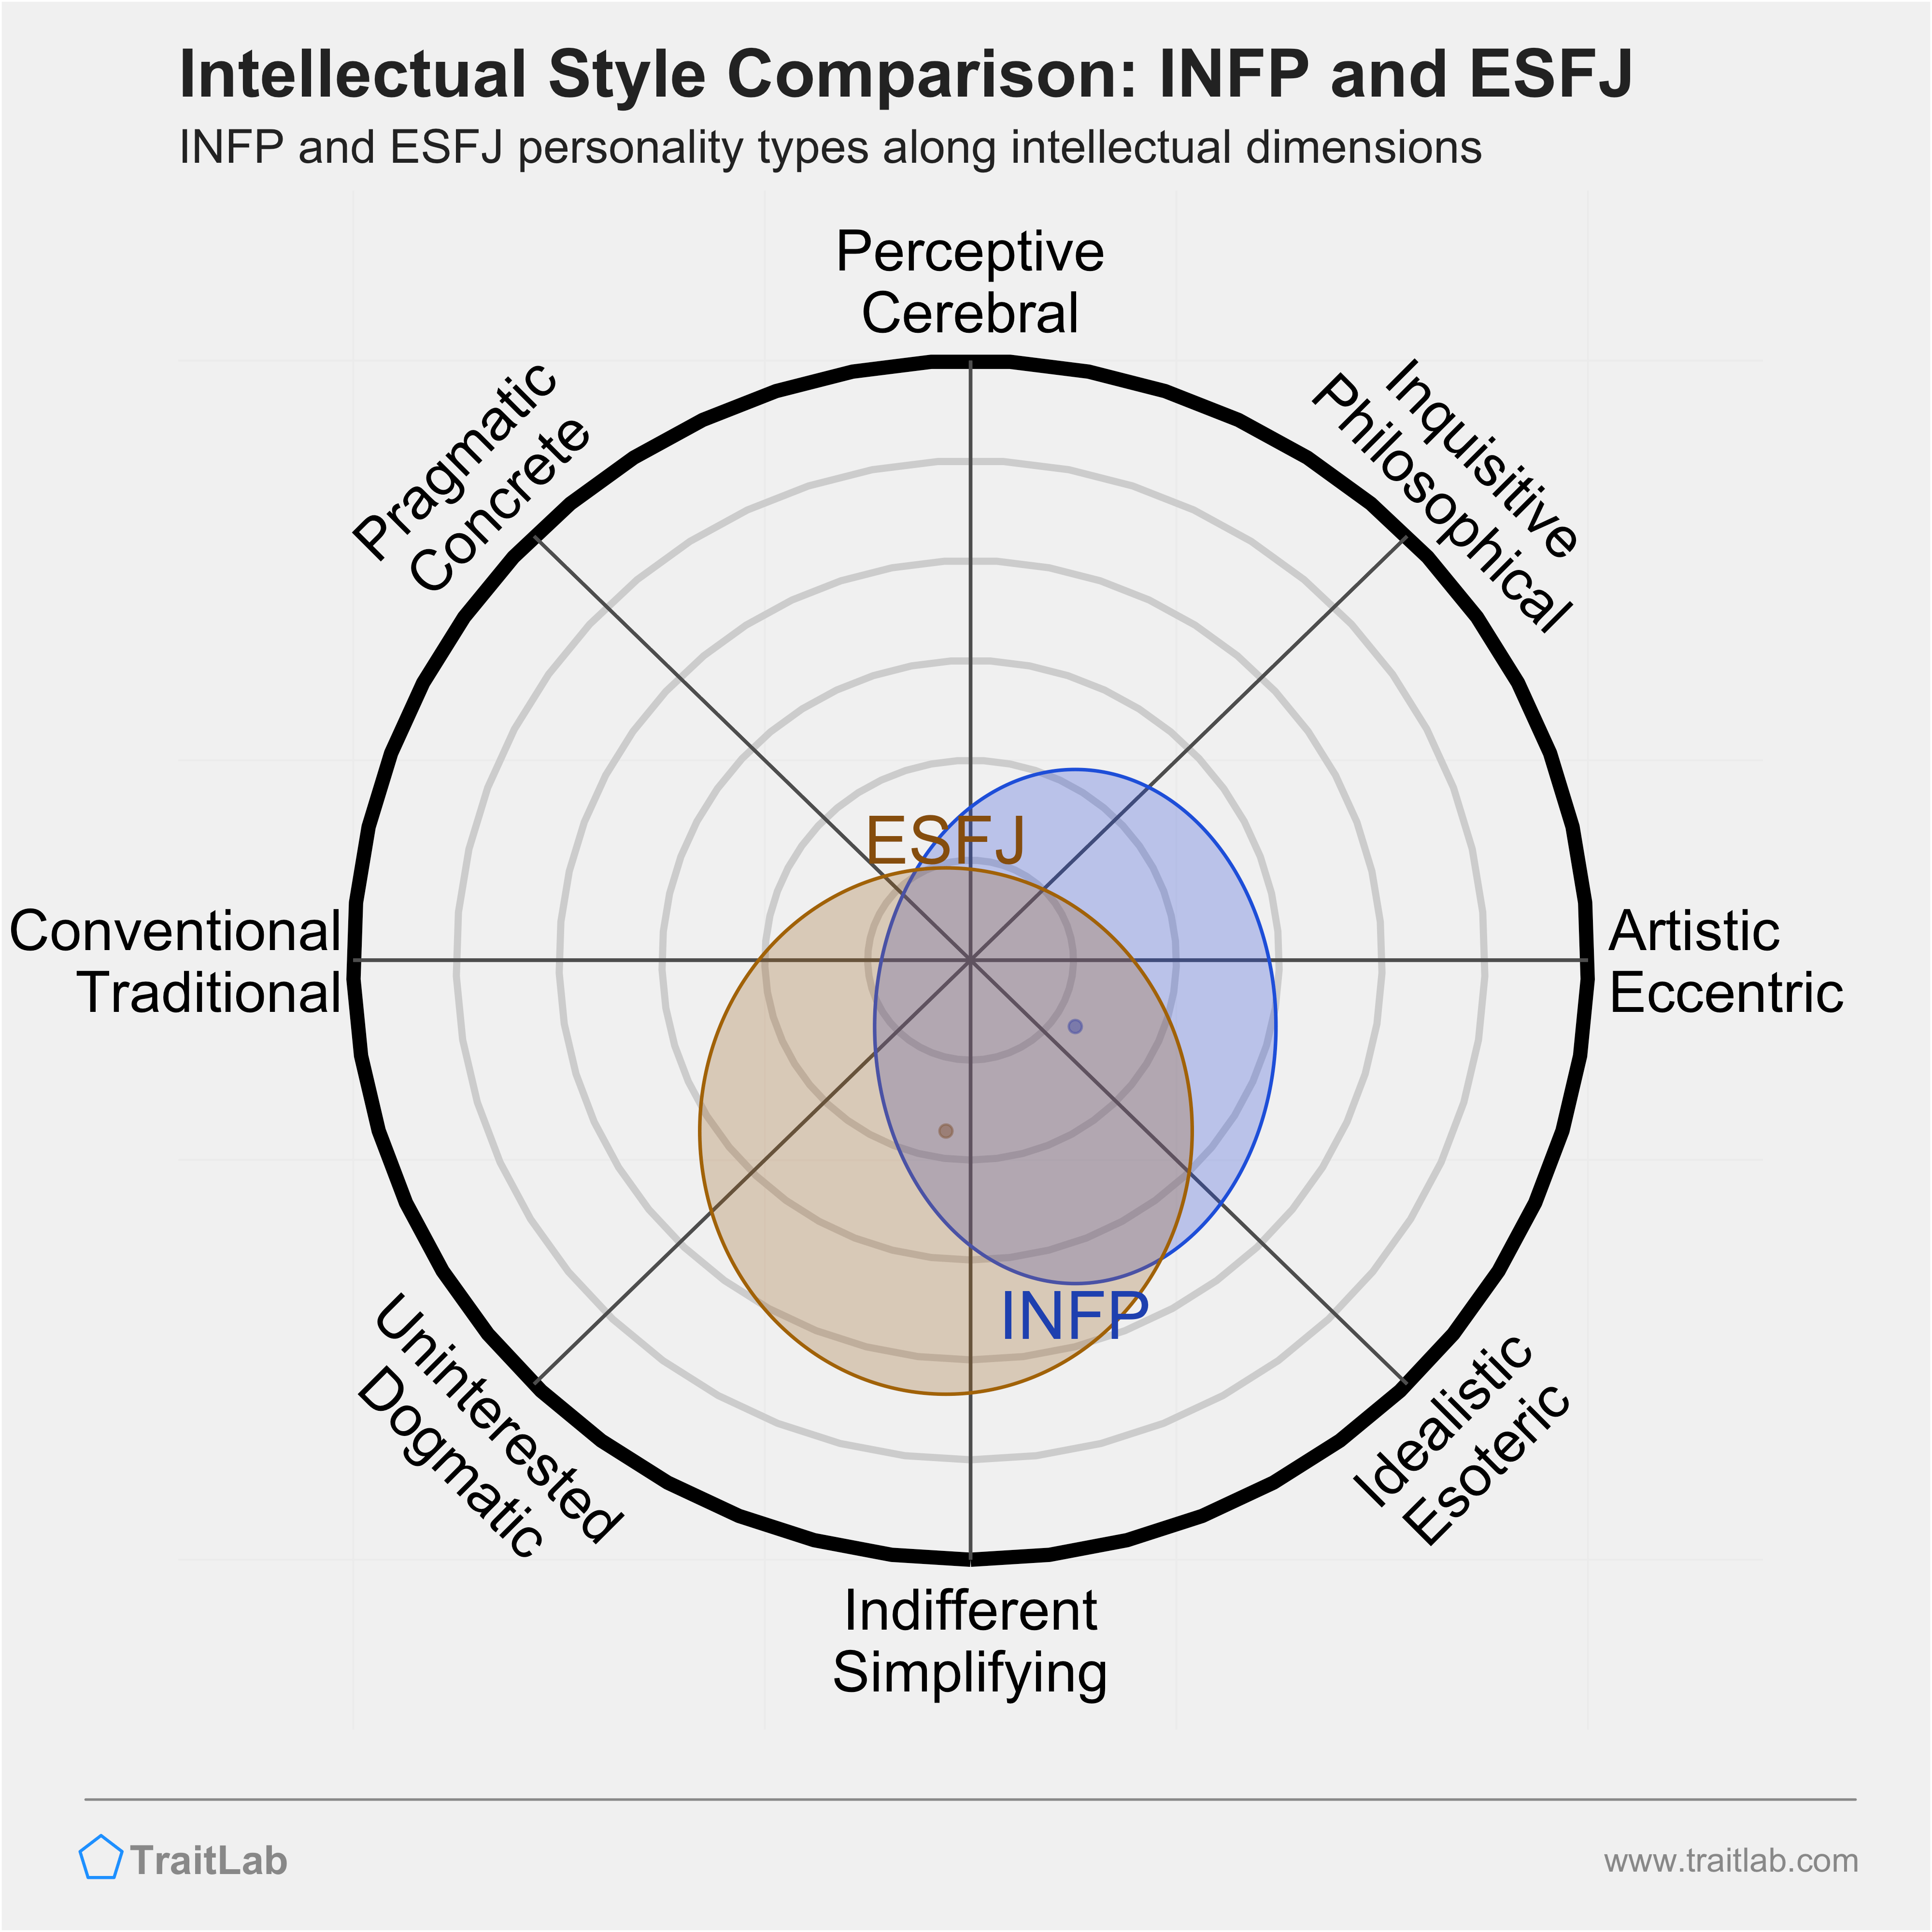 INFP and ESFJ comparison across intellectual dimensions